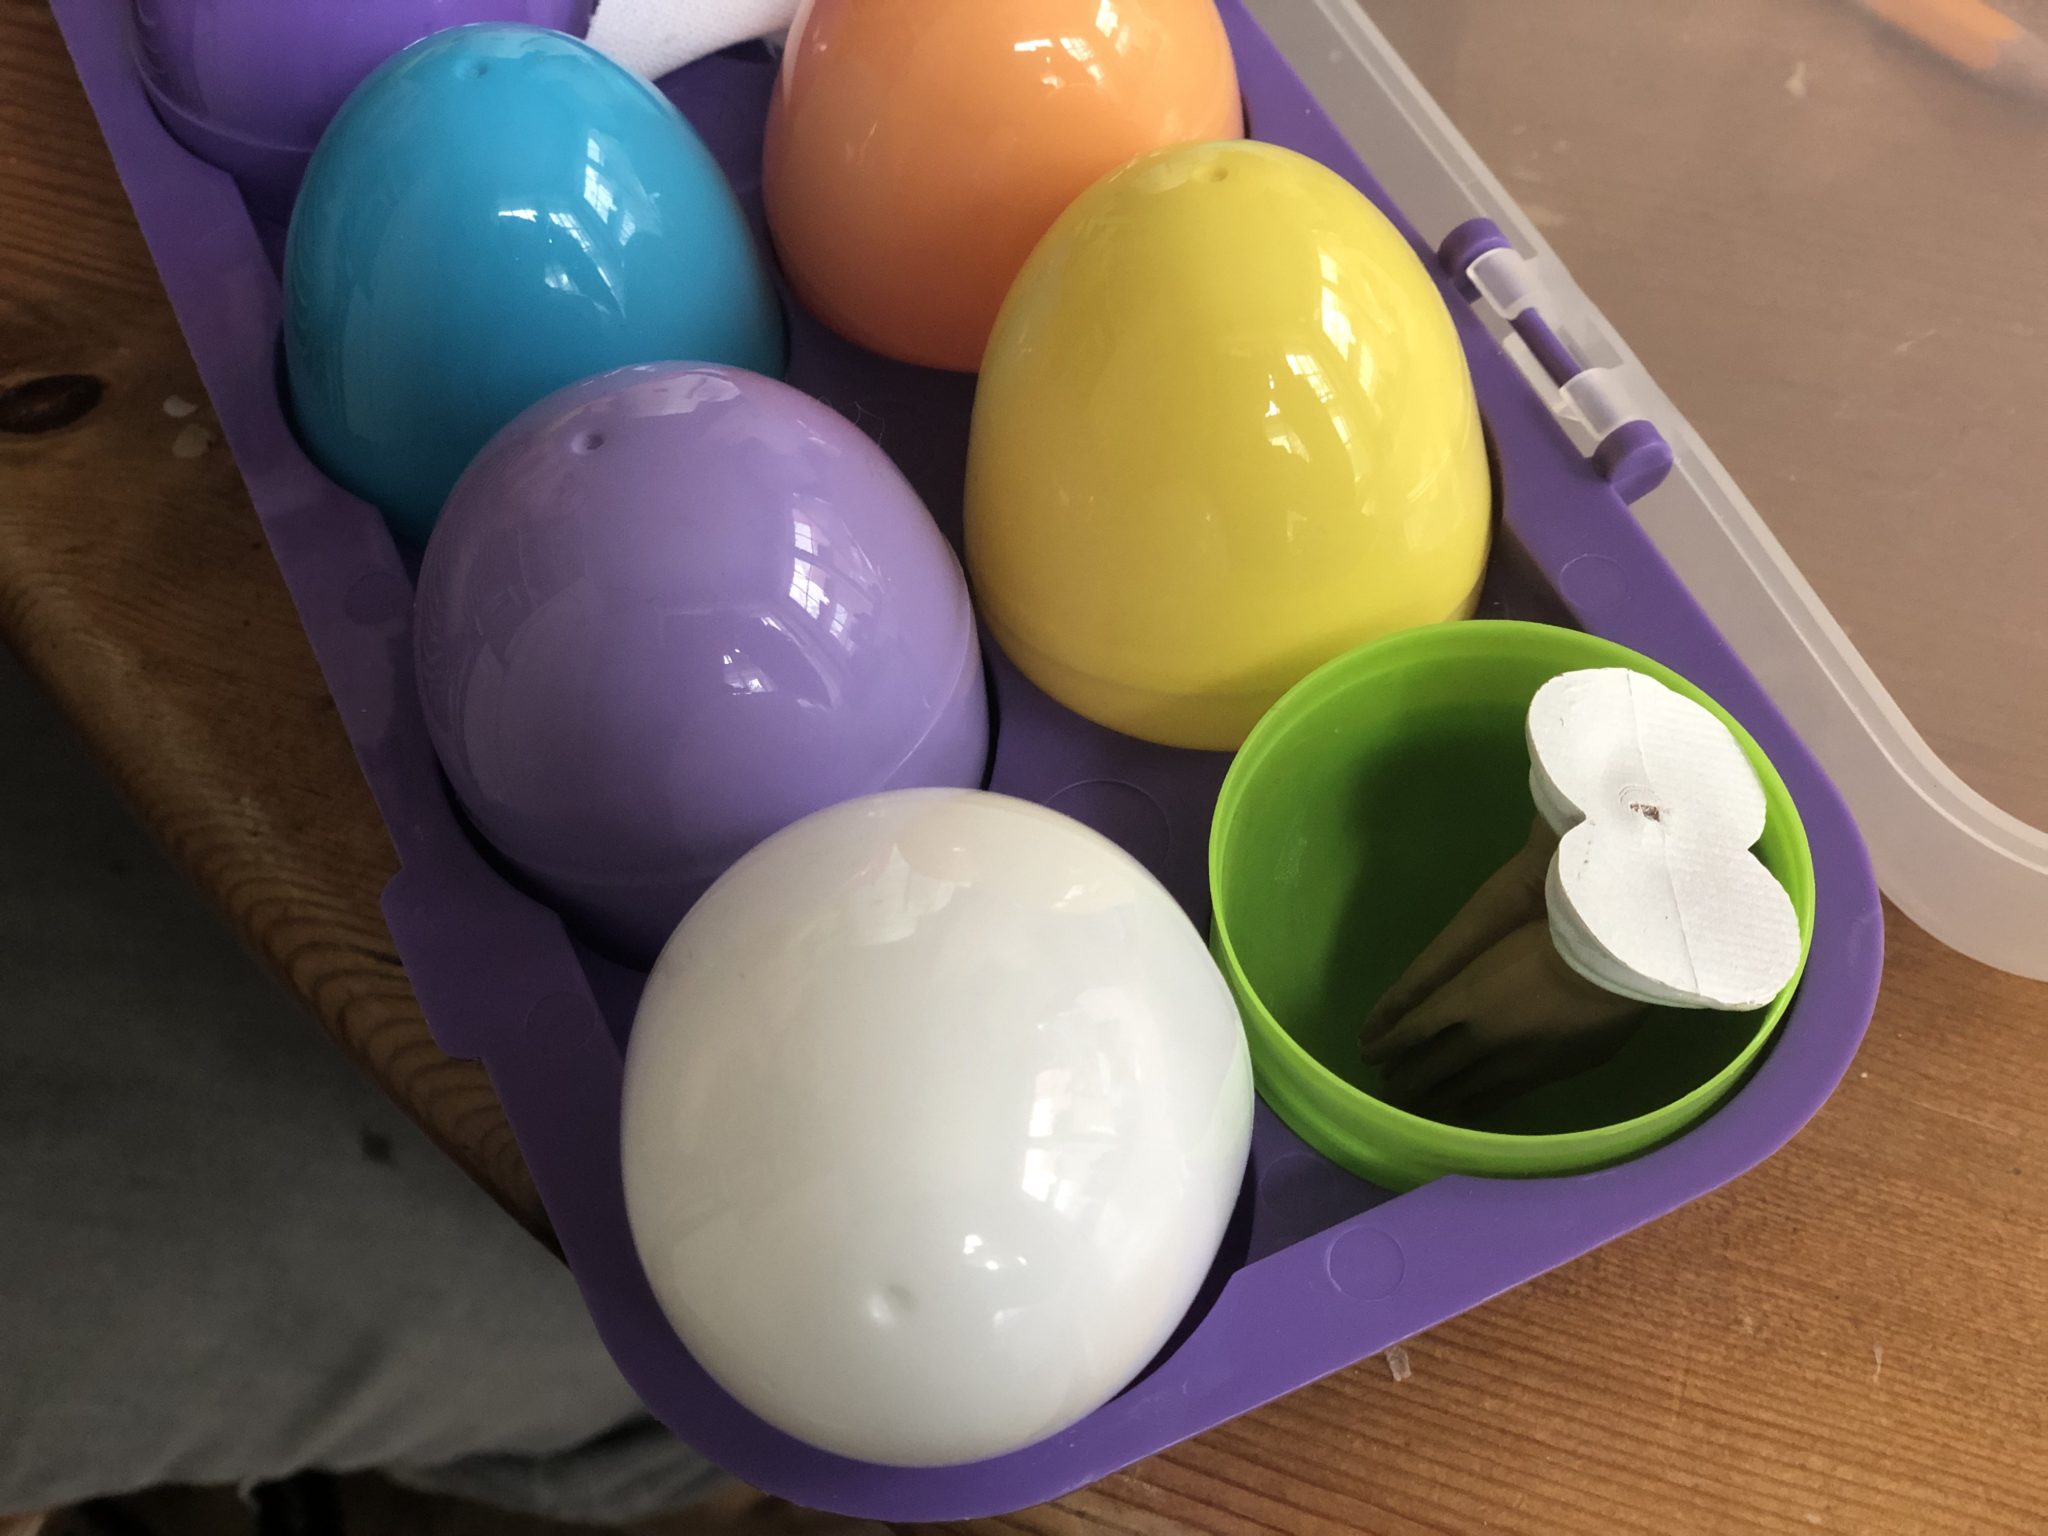 Resurrection eggs